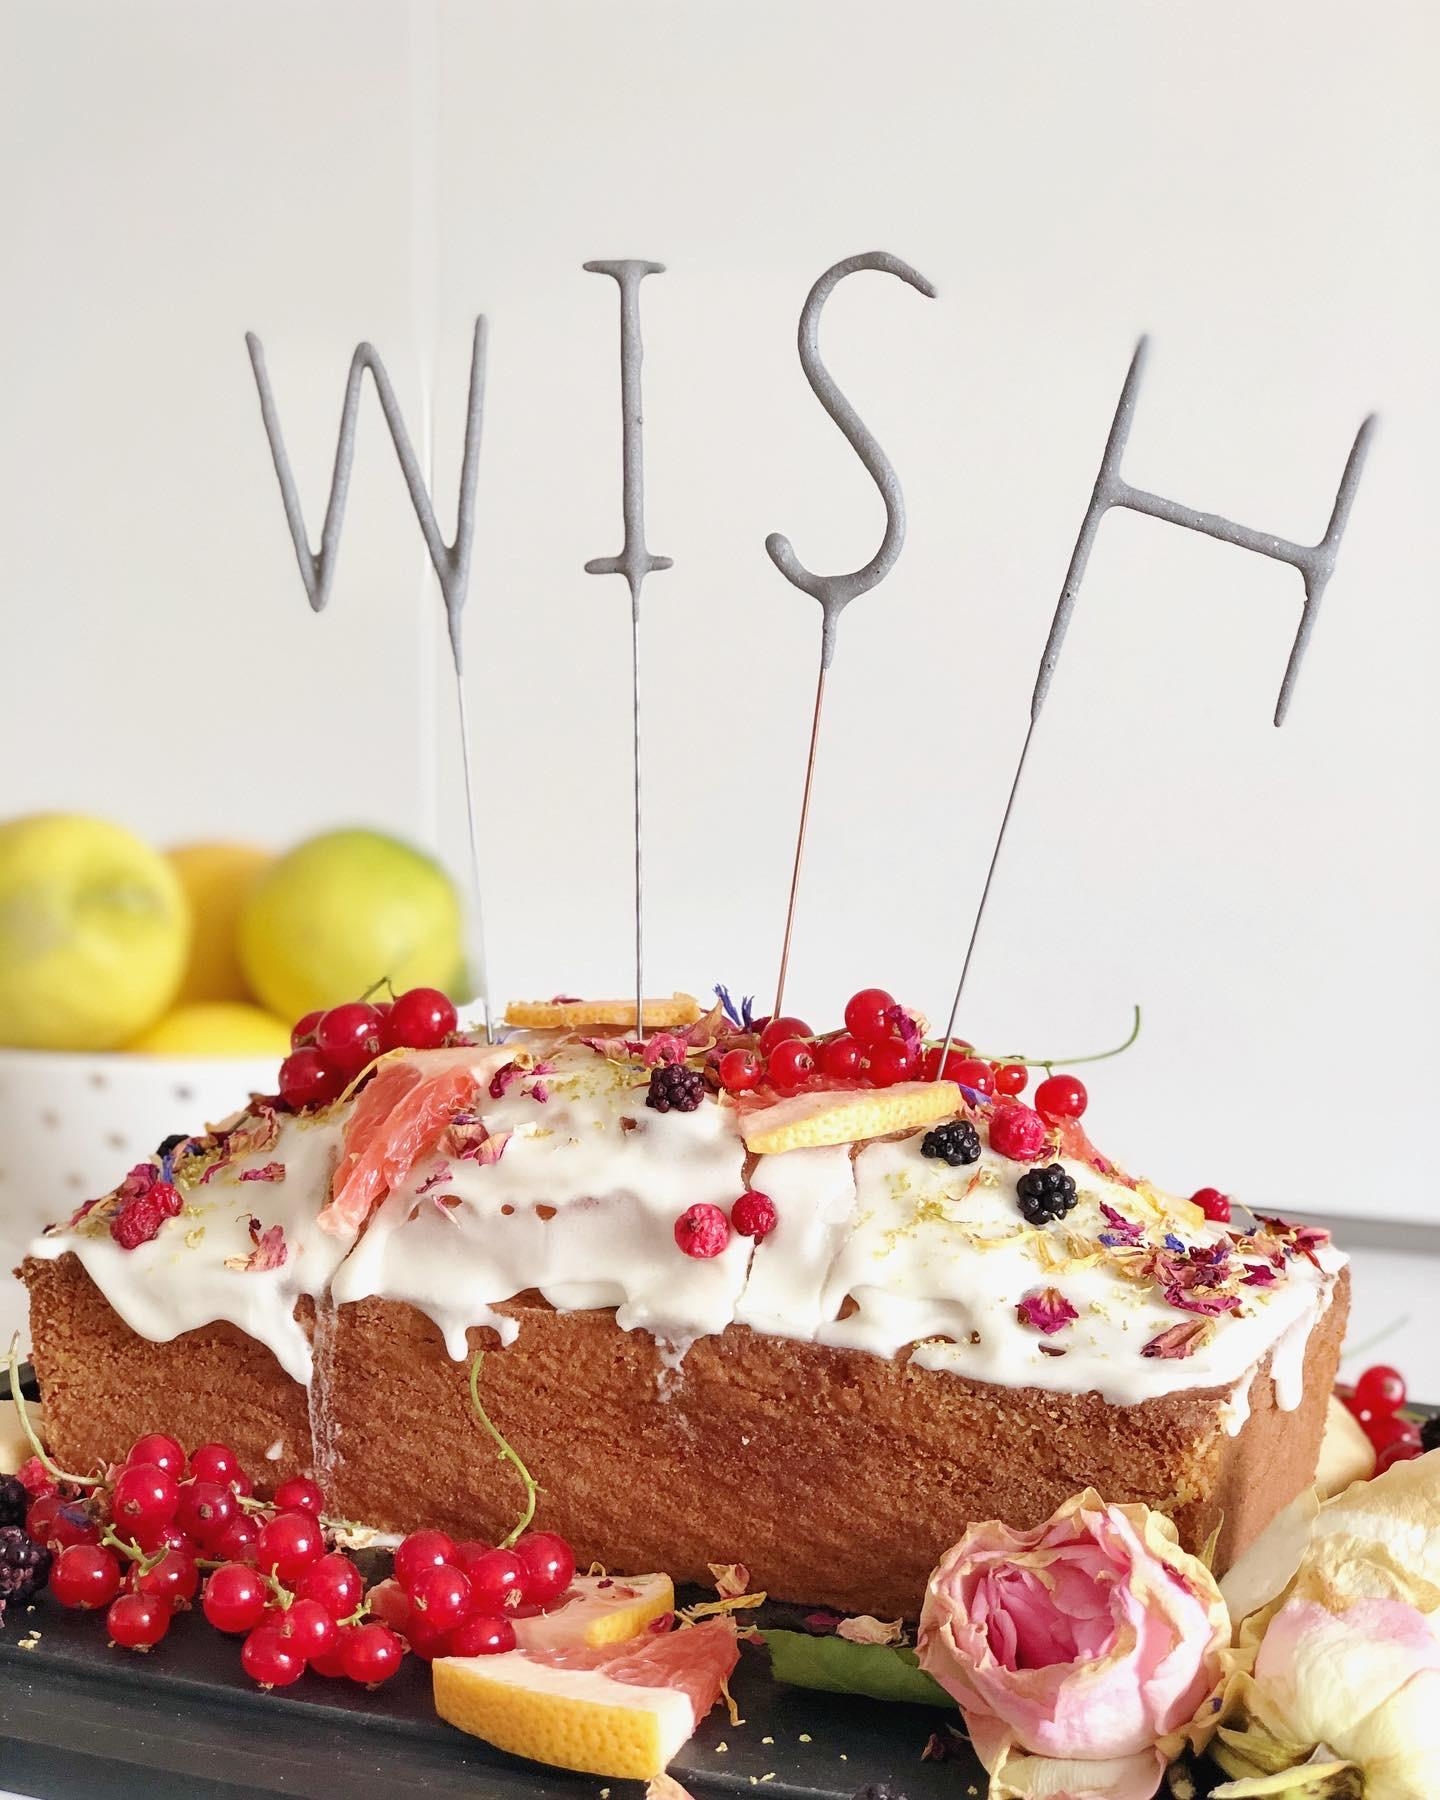 #kuchenzeit 🍋
#birthdaycake #cakedesign #backen #cake #kuchen #foodstyle #foodstyling #food #bakery